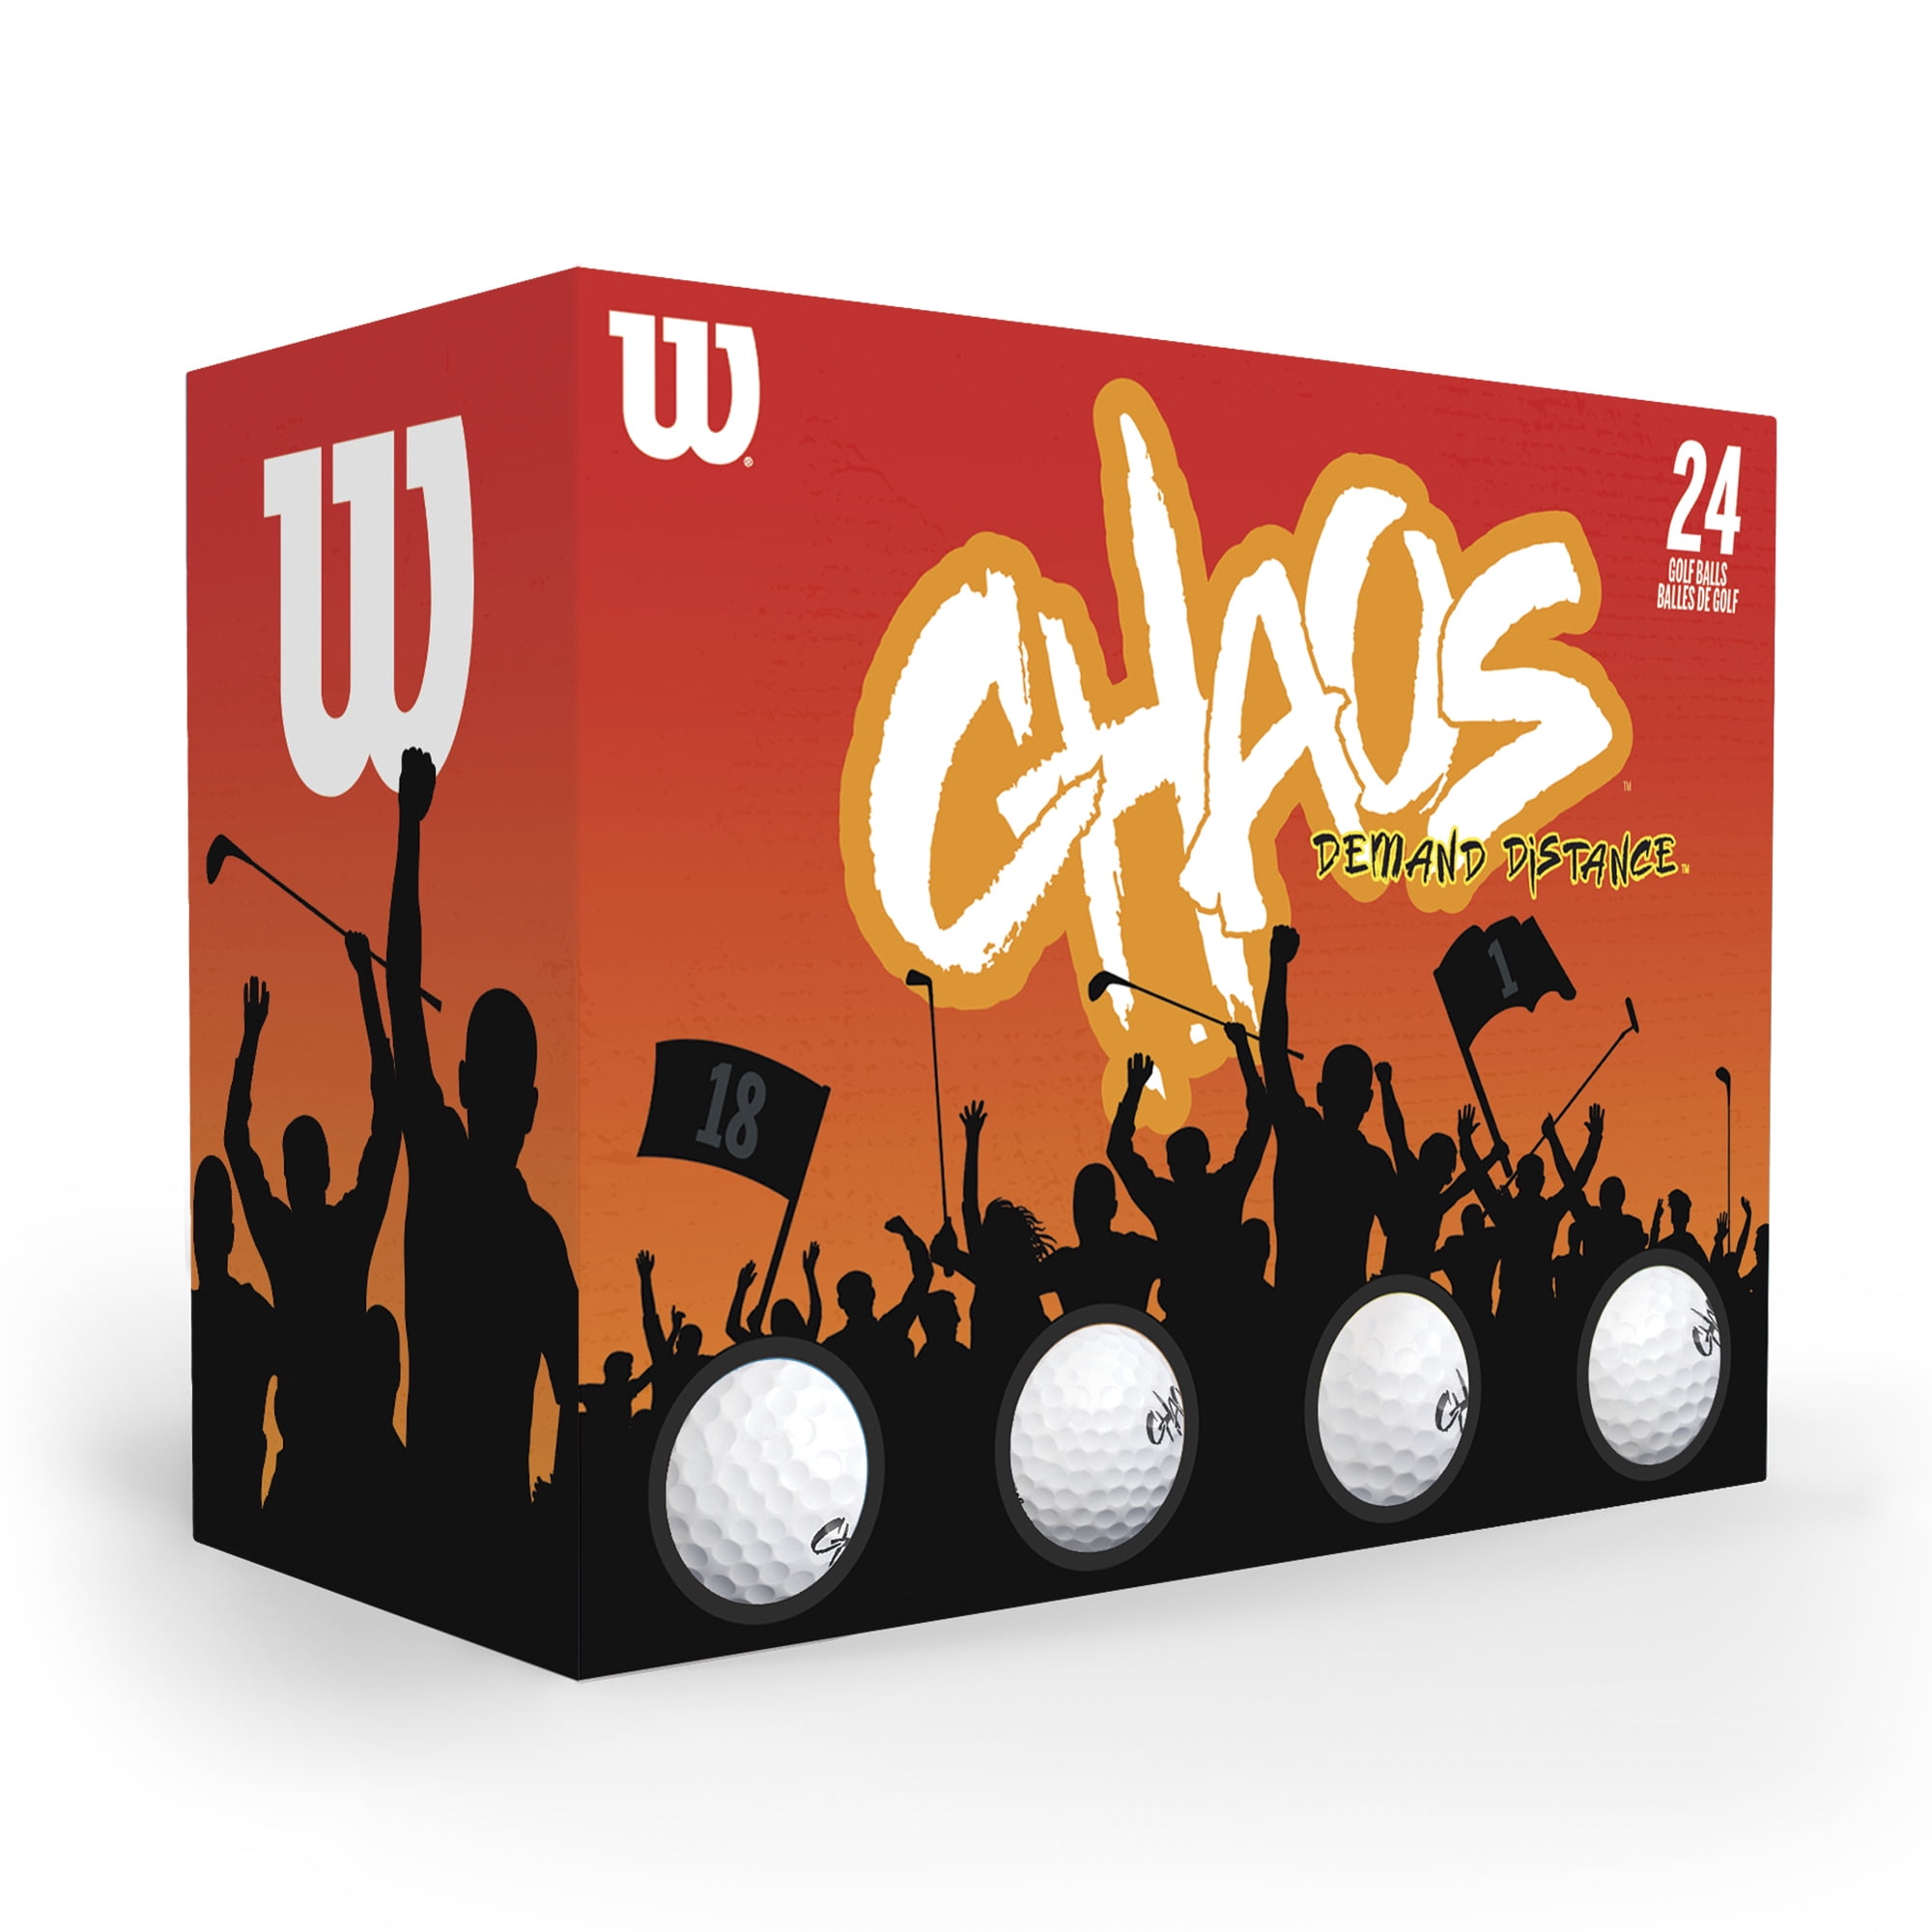 Wilson Chaos Golf Balls, White - 24-Pack